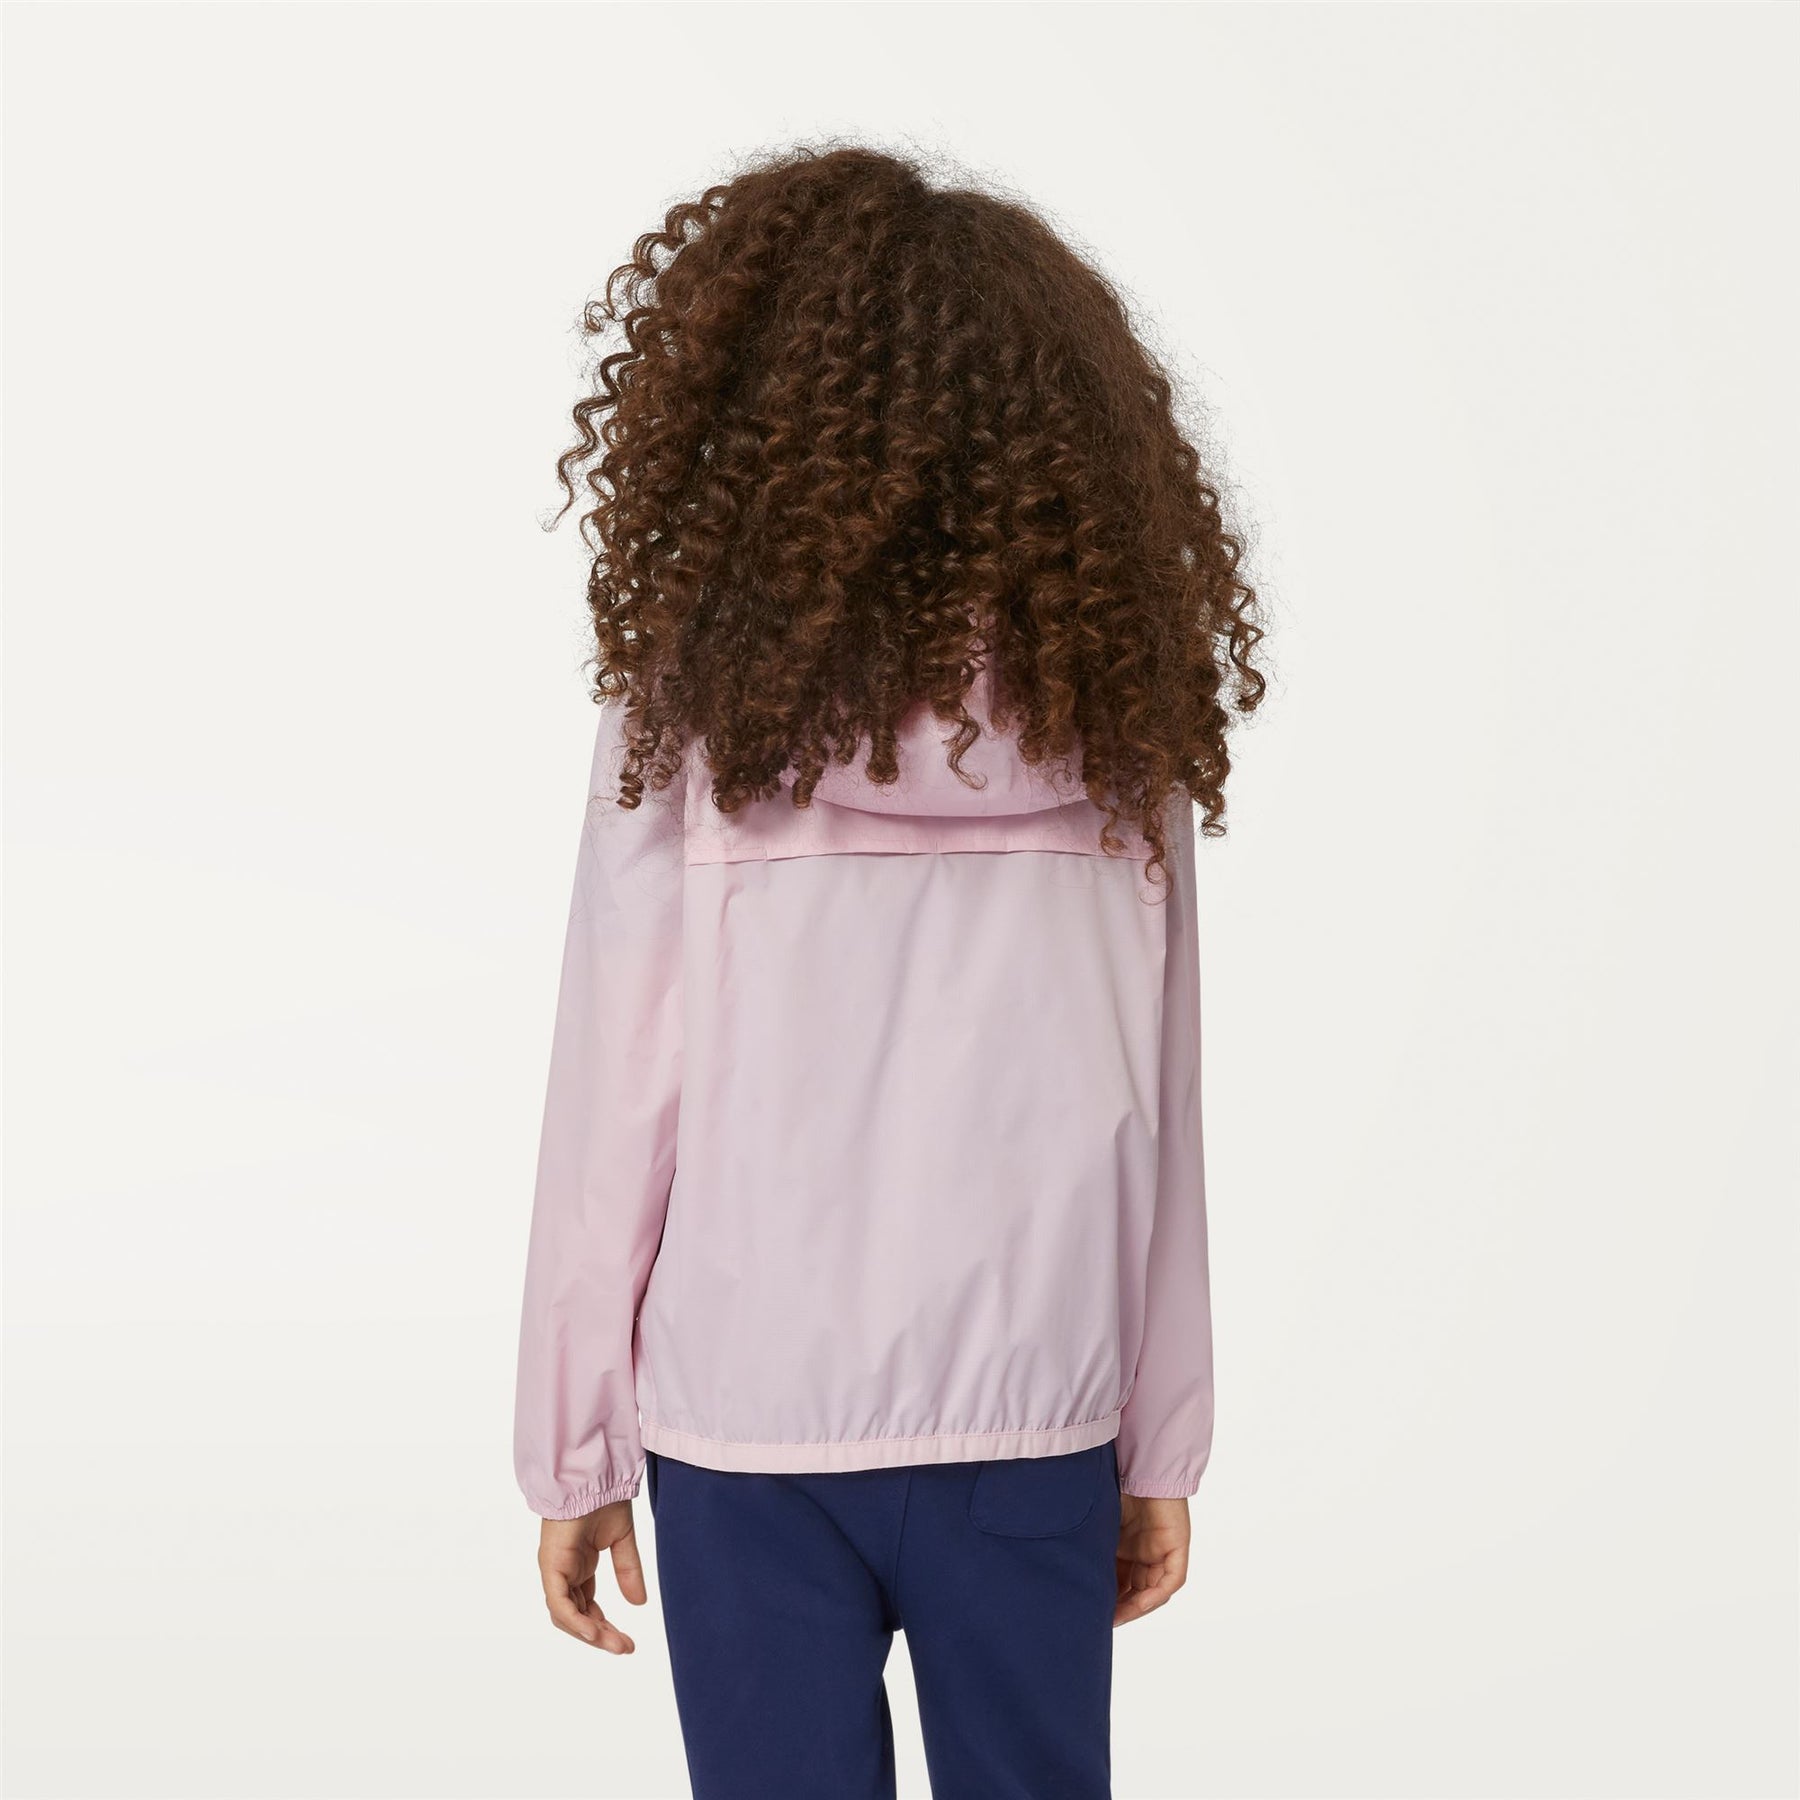 Claude - Kids Packable Full Zip Waterproof Rain Jacket in Pink